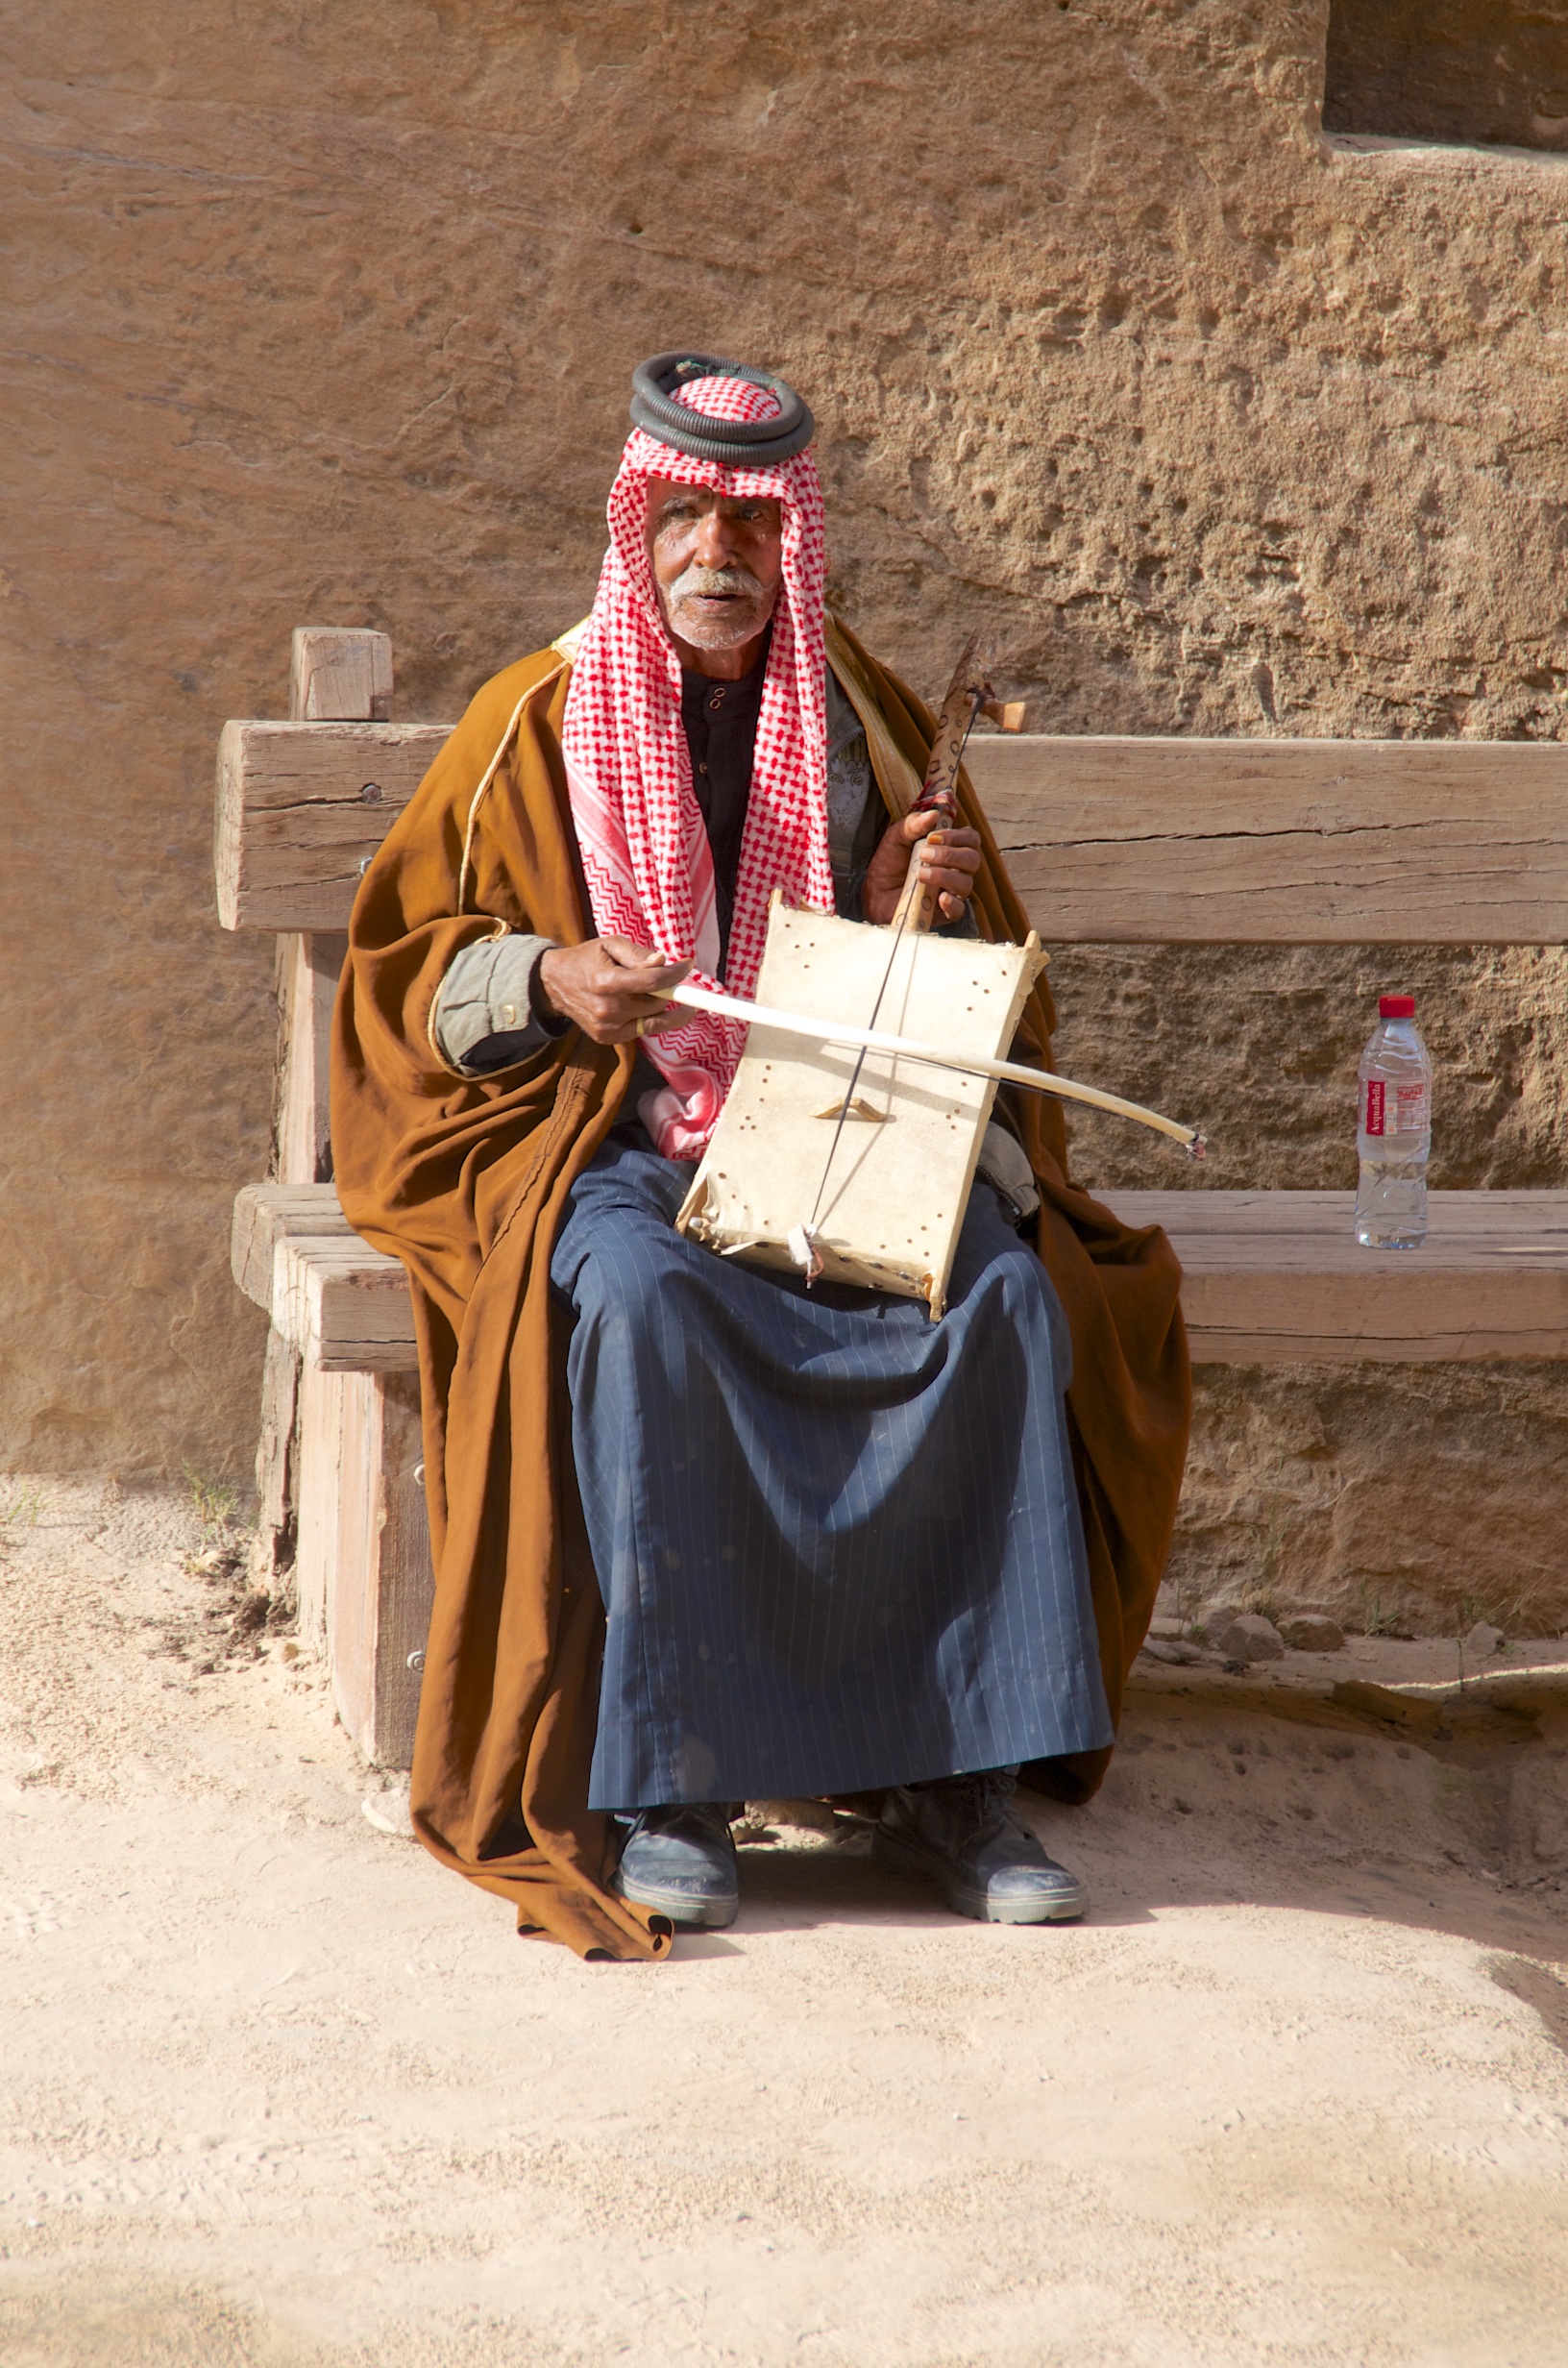  Bedouin playing musical instrument, Little Petra 